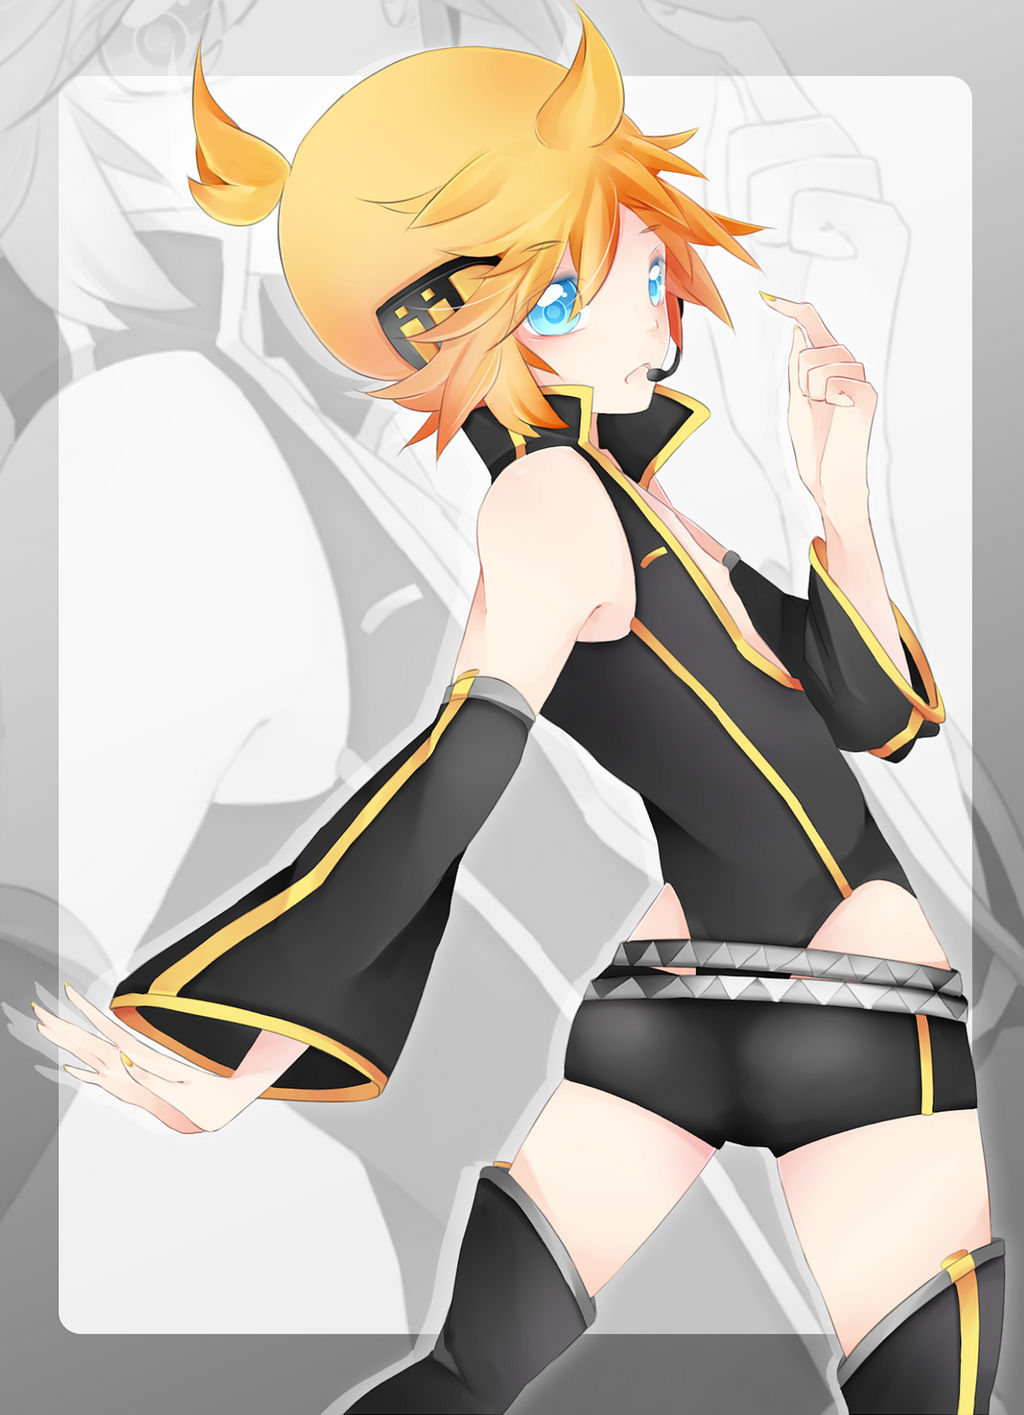 Len: Young adult dancer again